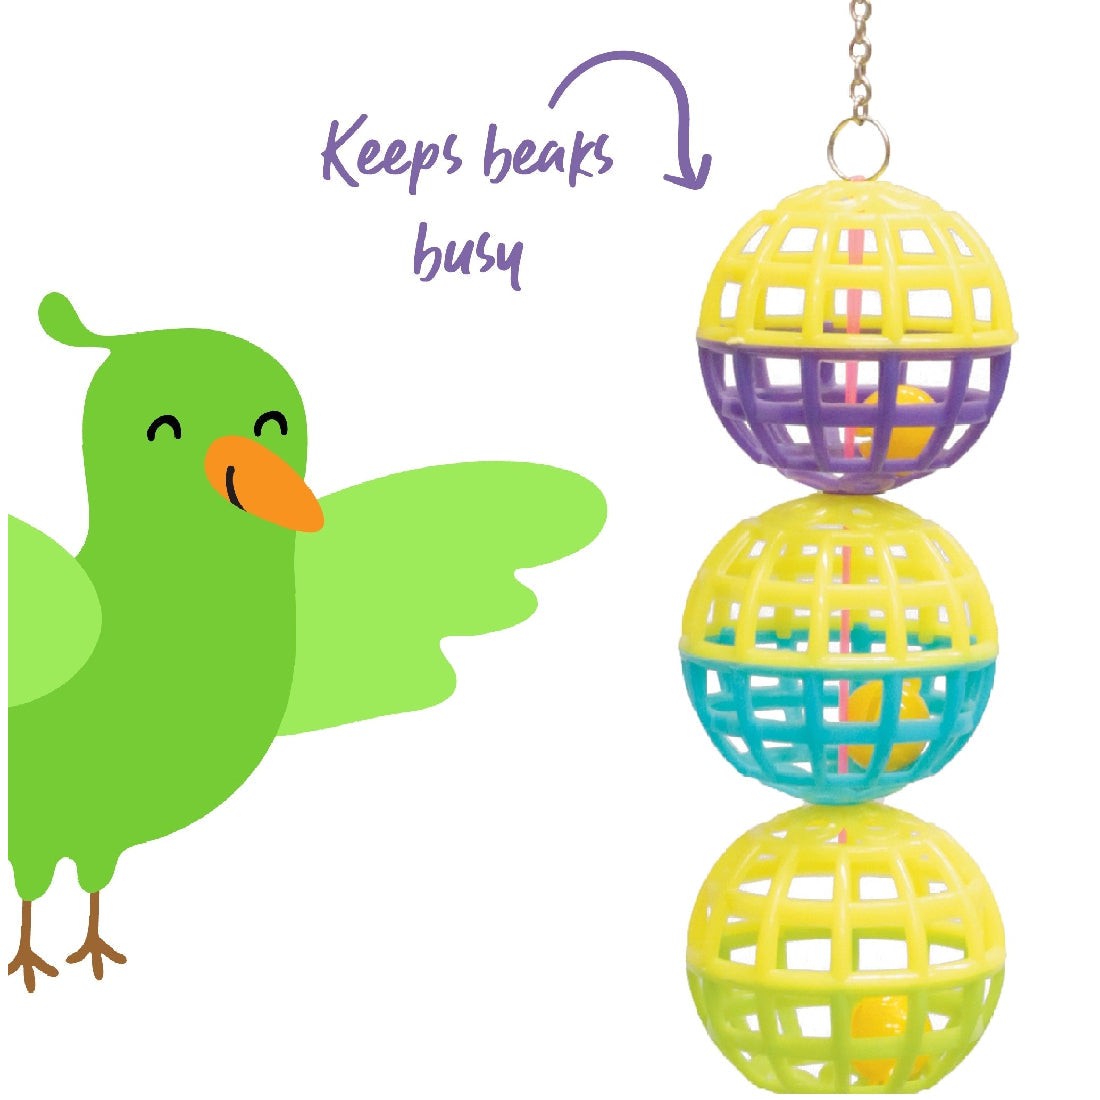 Alt: Green cartoon bird beside hanging yellow and purple bird toy.